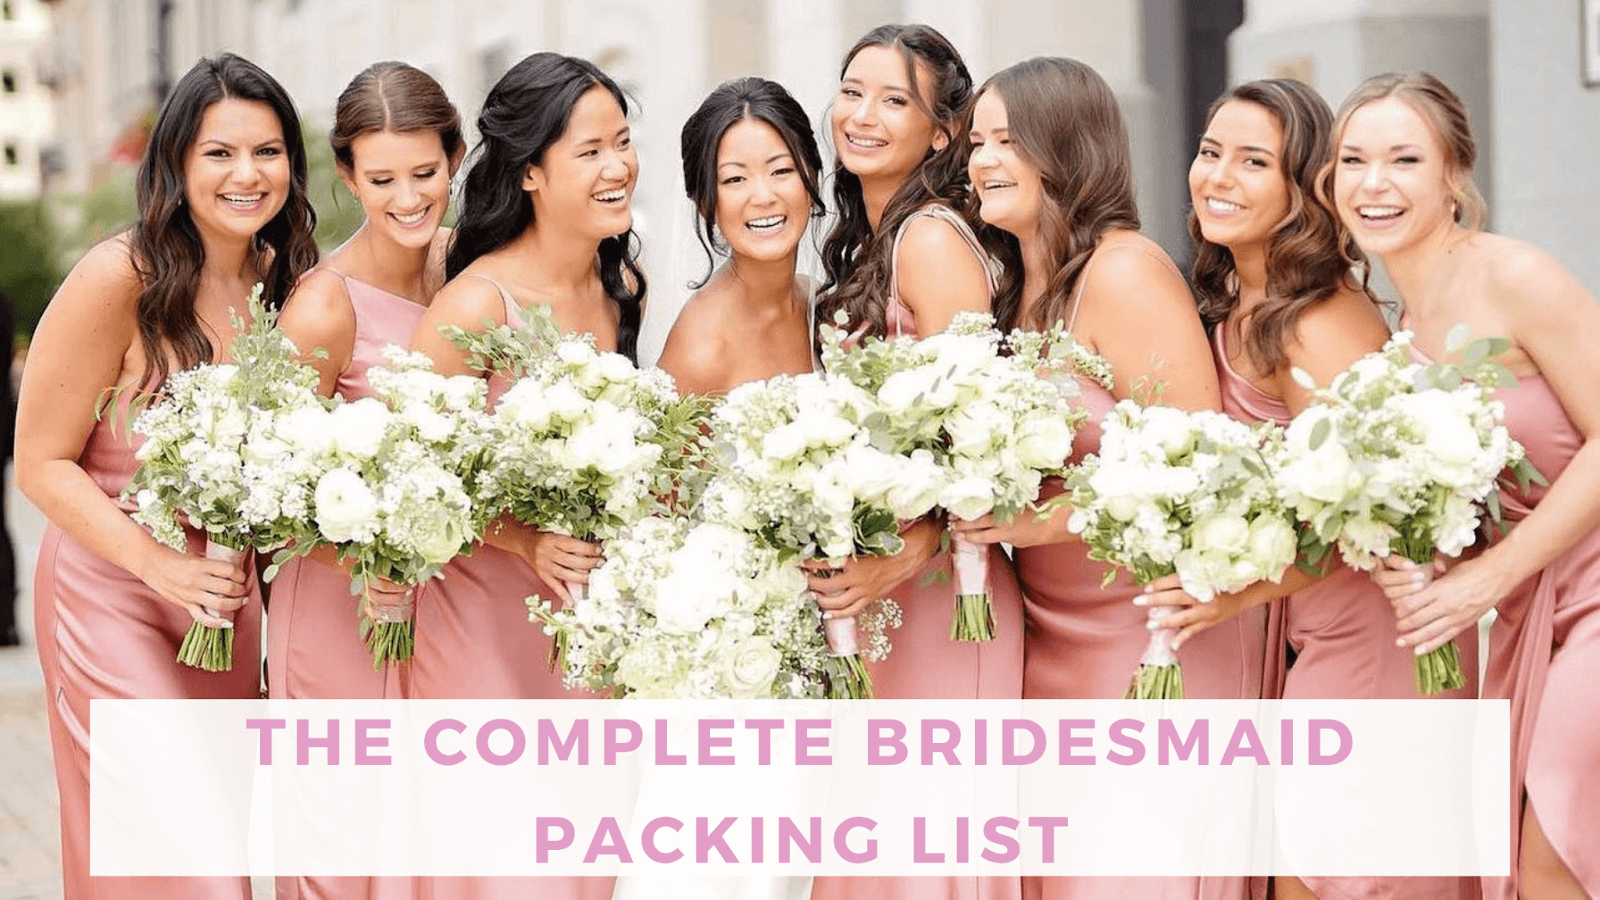 Bridal accessories checklist, Articles